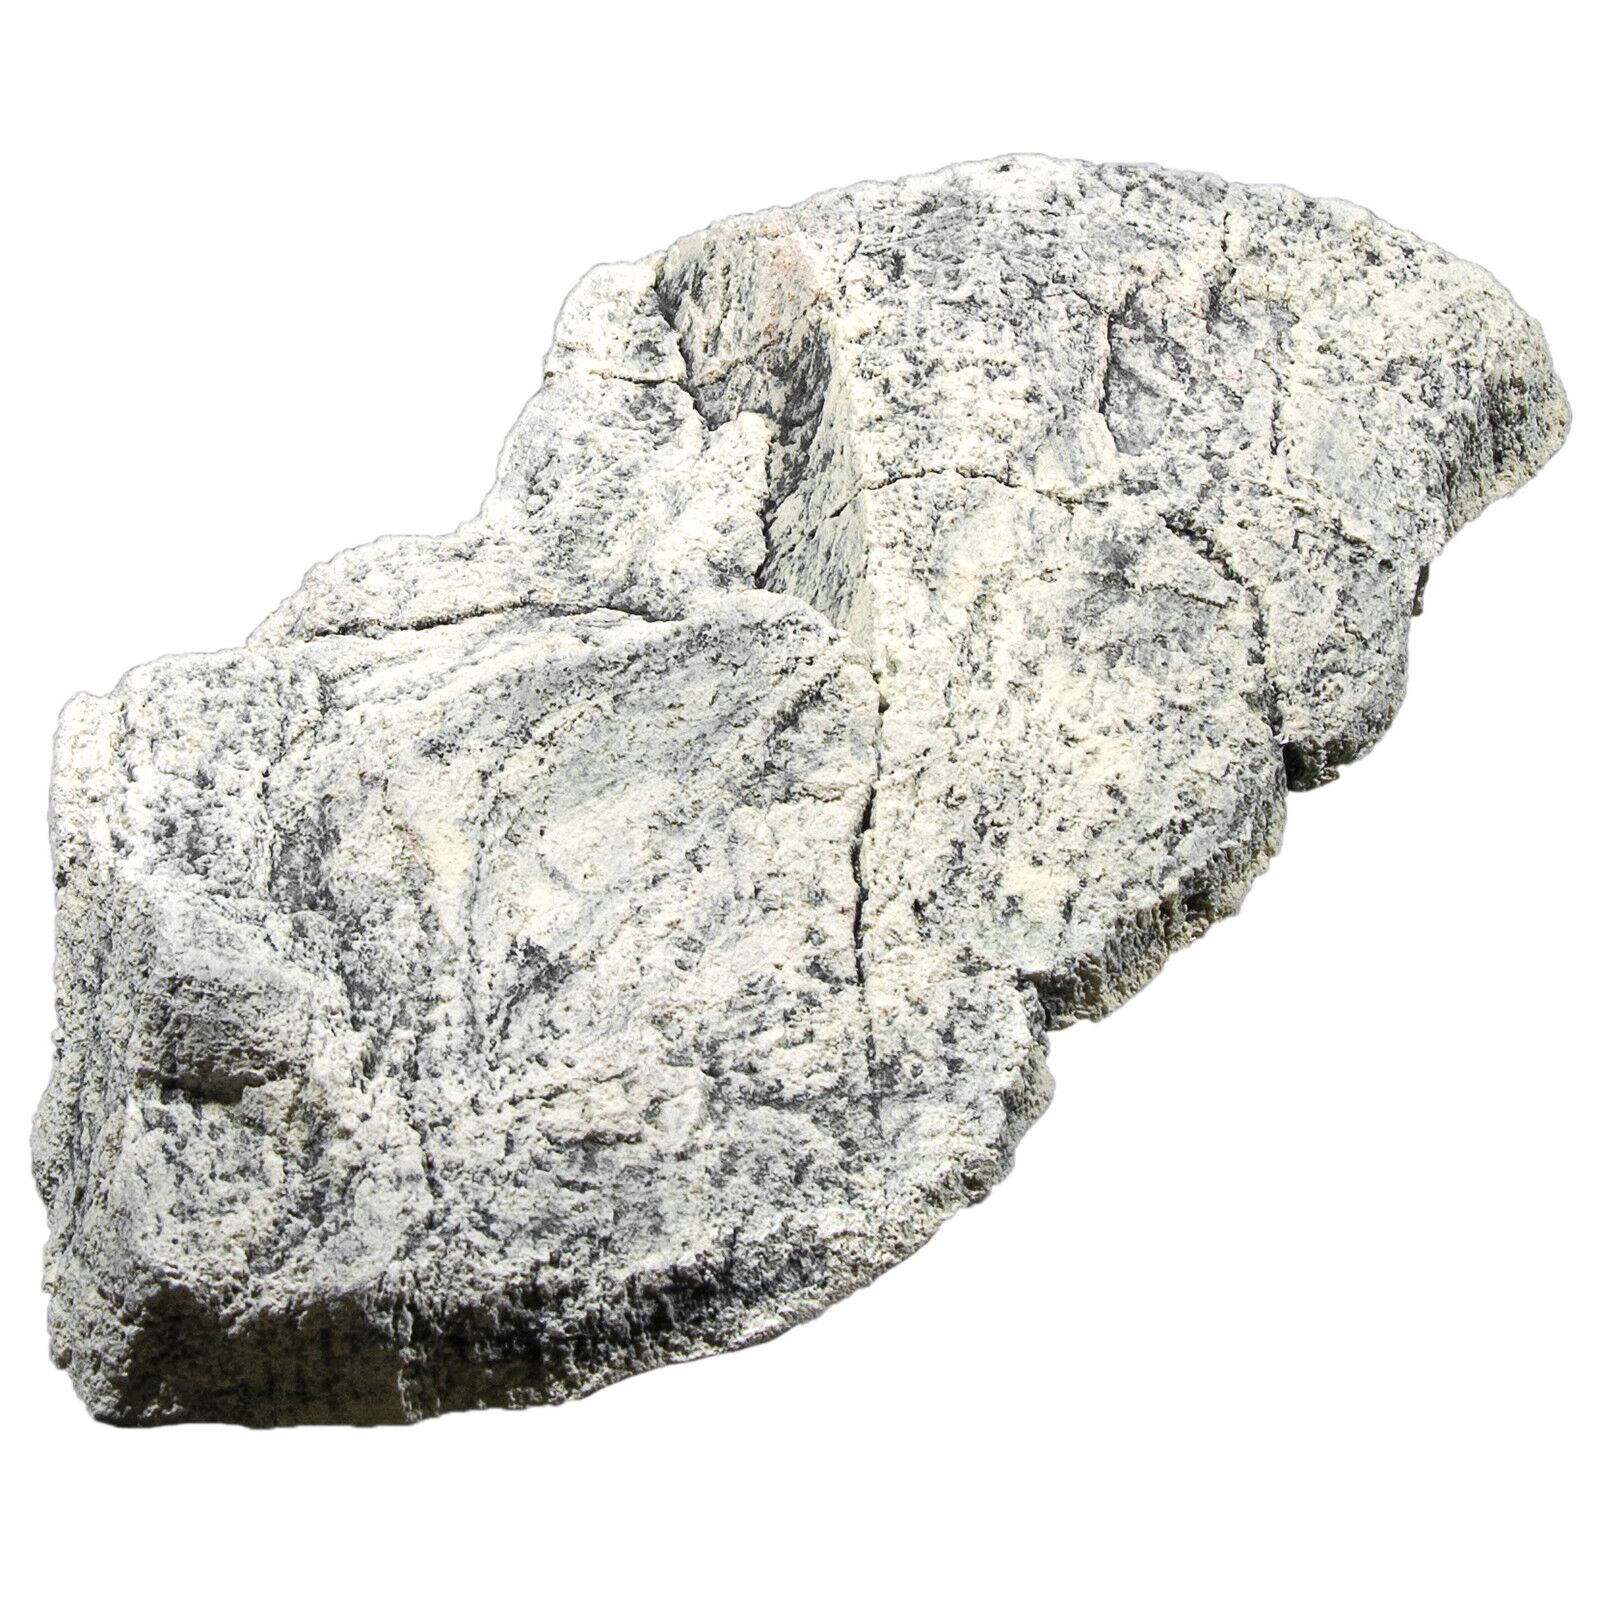 Back to Nature - Aquarium Modul White Limestone